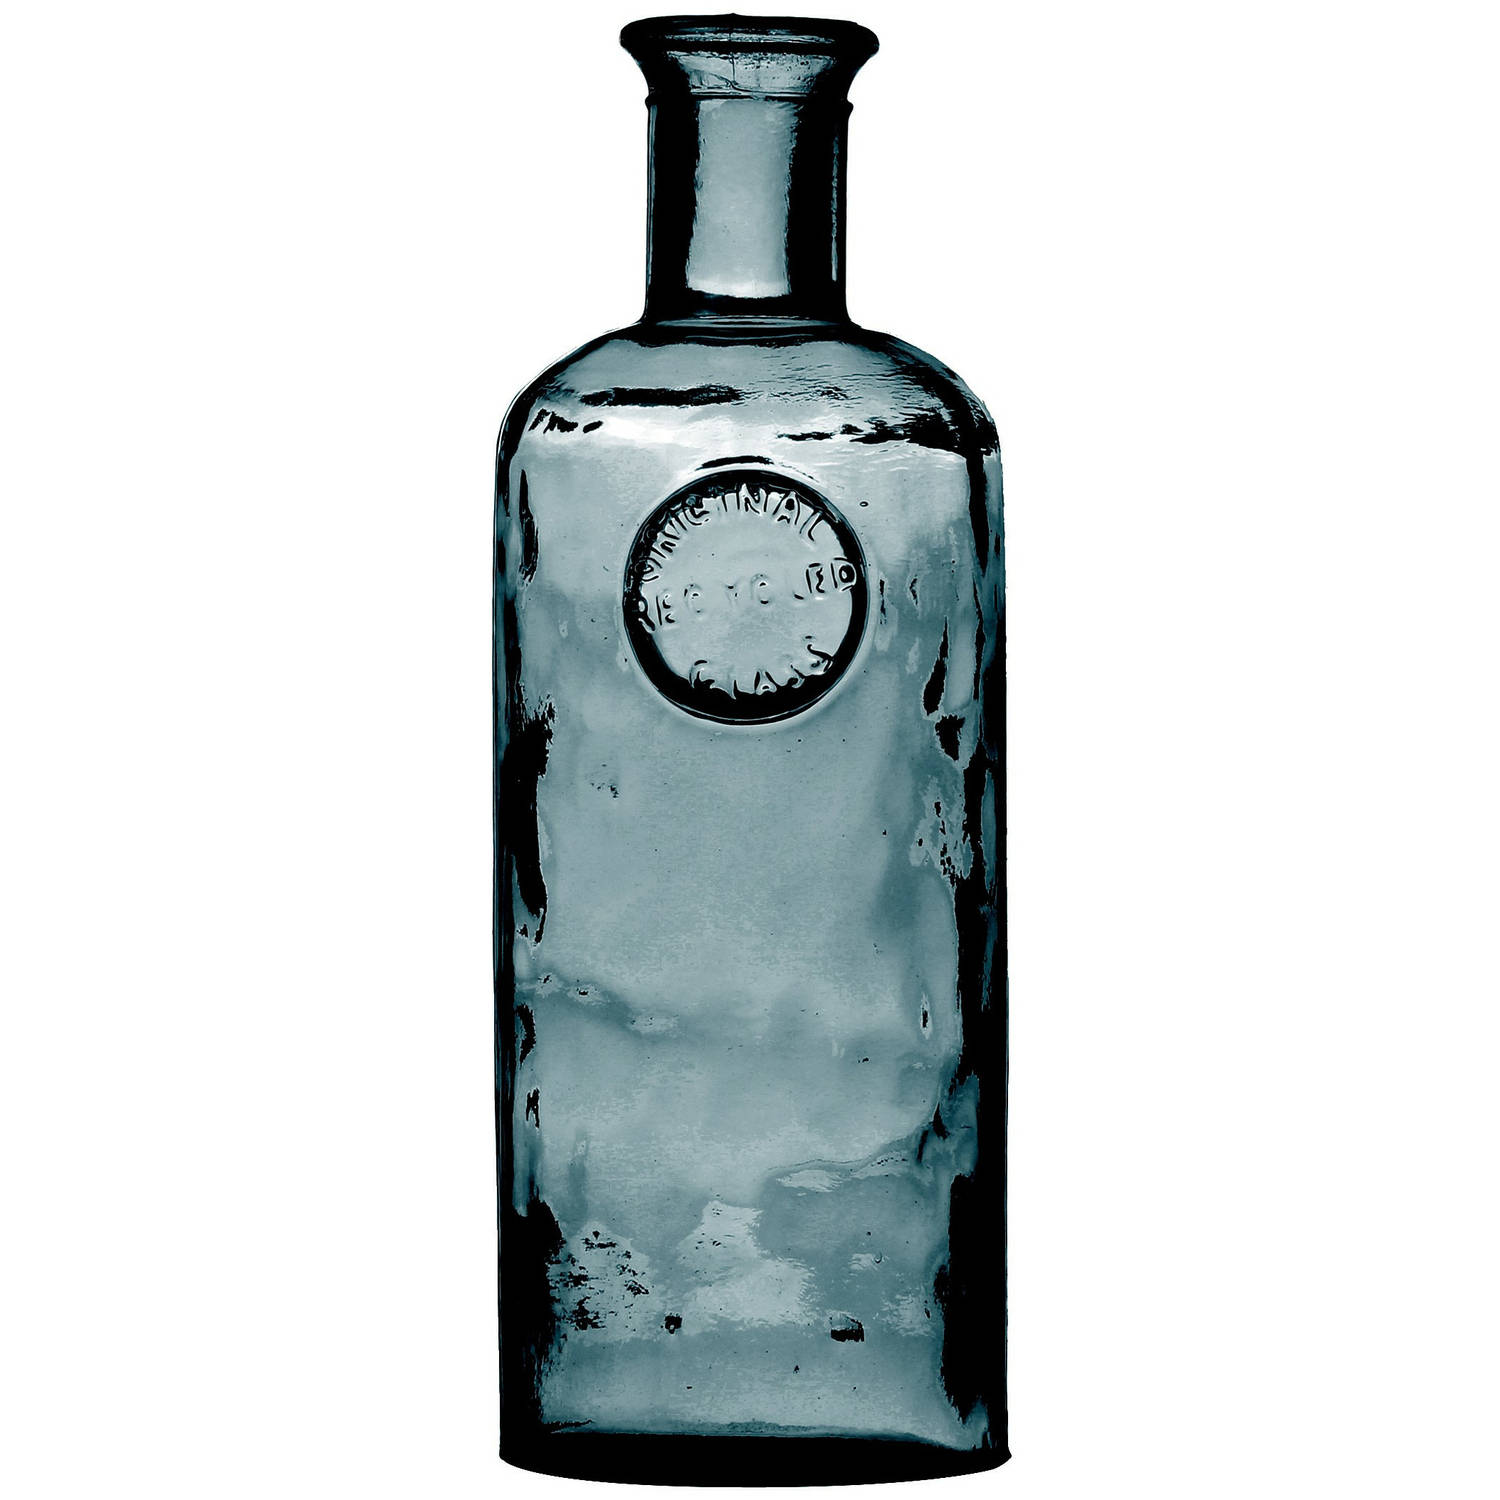 Natural Living Bloemenvaas Olive Bottle - marine blauw transparant - glas - D13 x H35 cm - Fles vazen